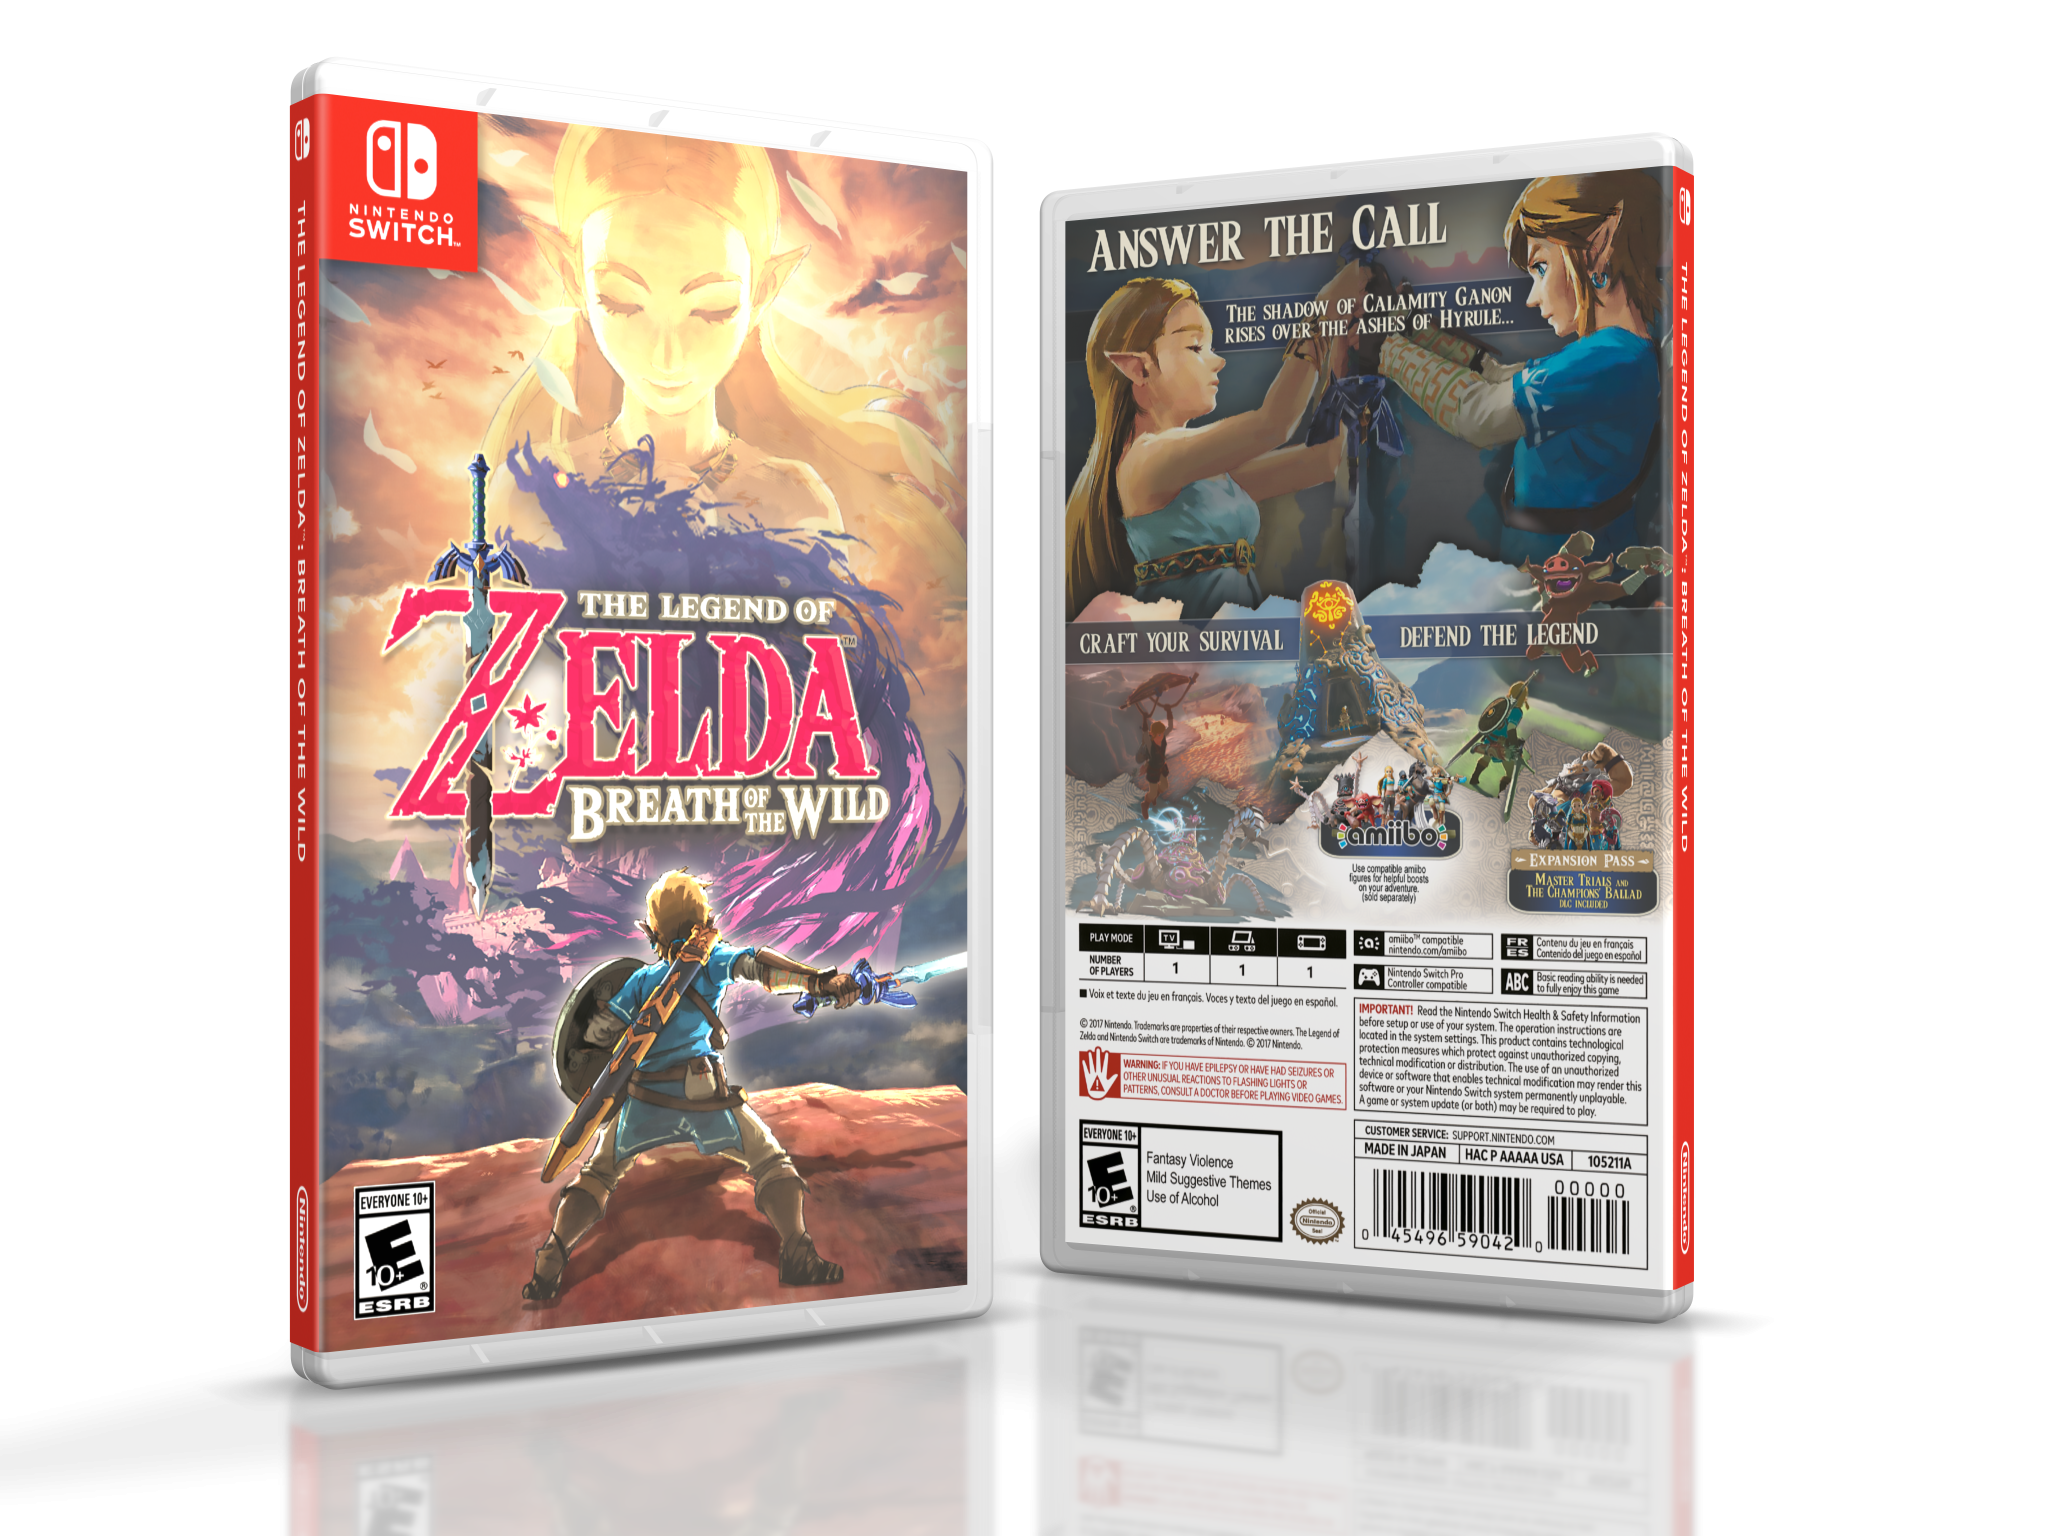 The Legend of Zelda: Breath of the Wild box cover